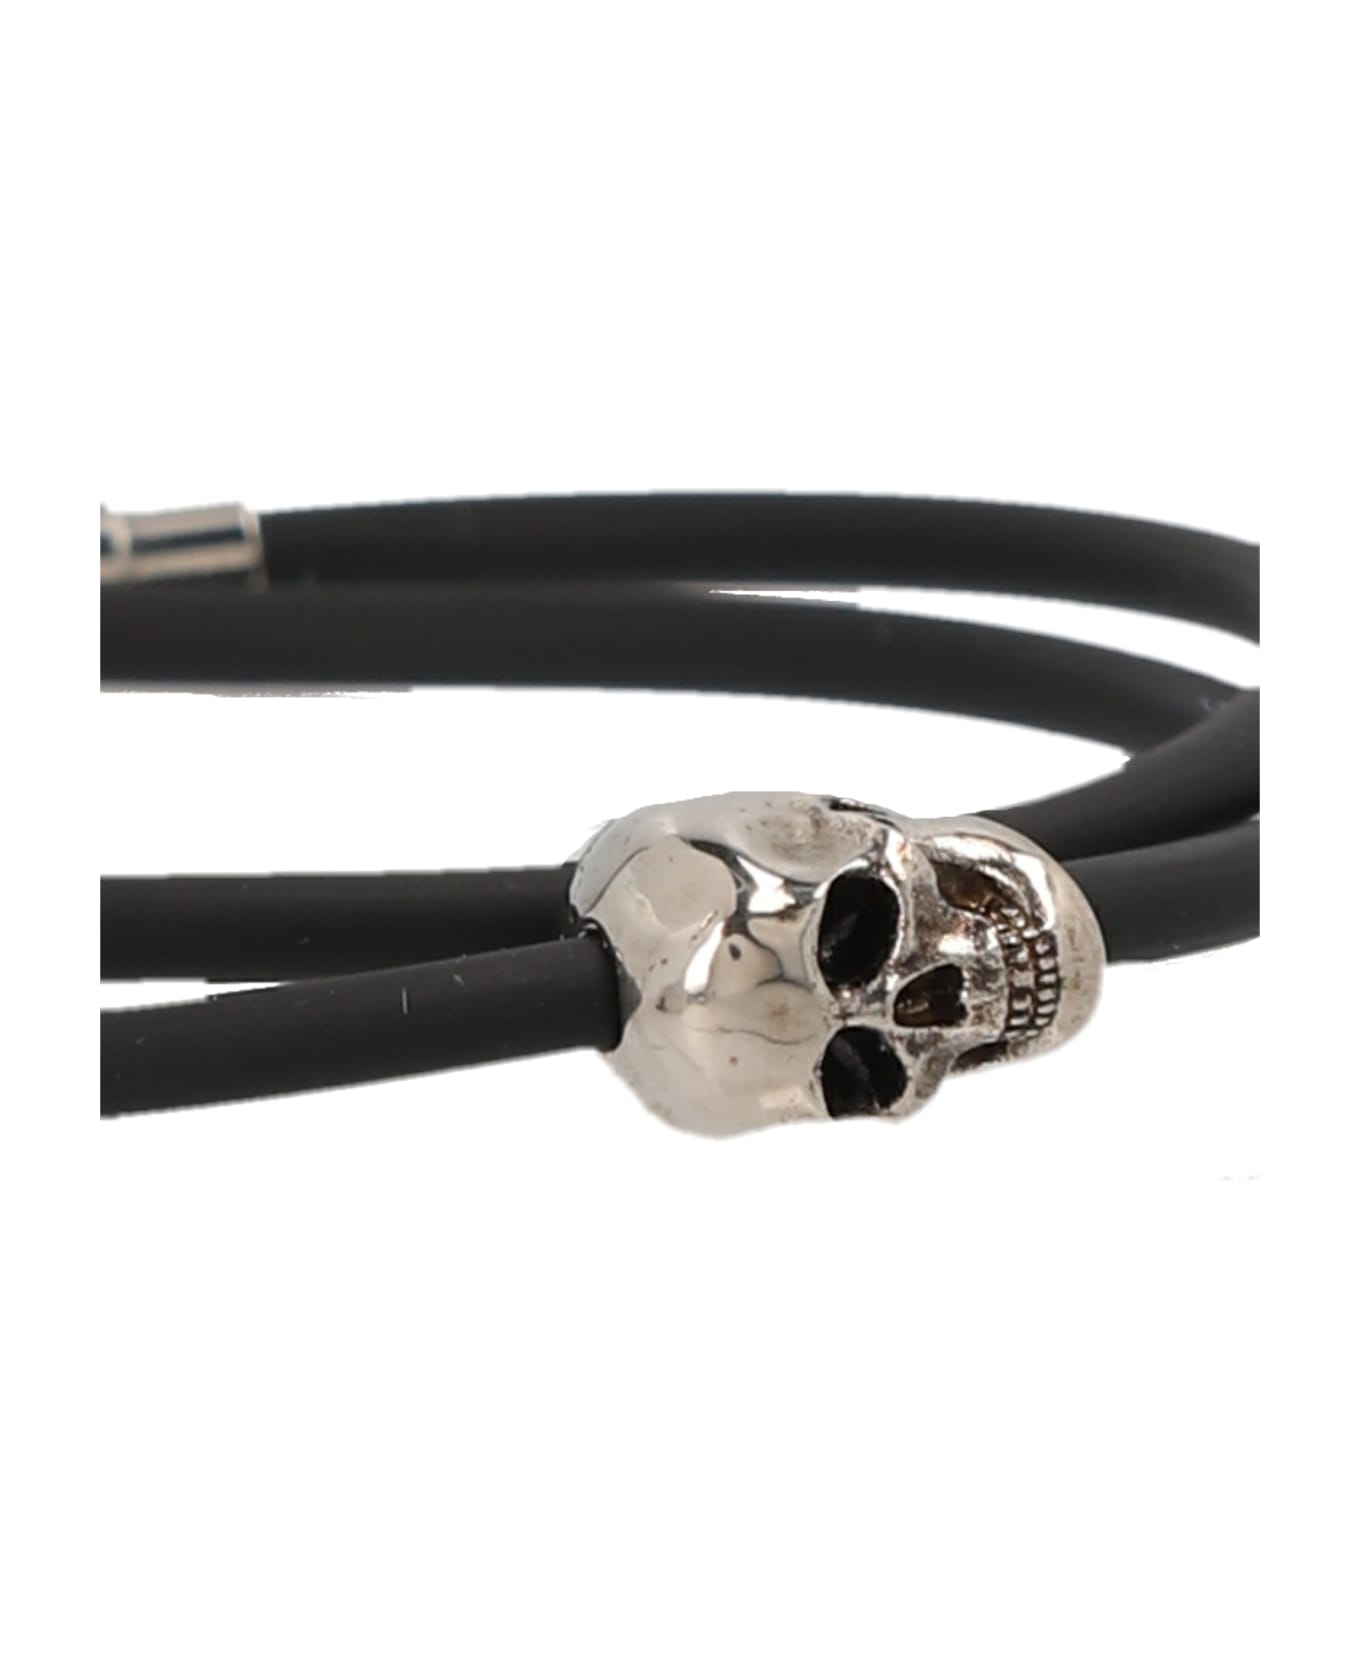 Alexander McQueen Double Wrap Skull Bracelet - Black